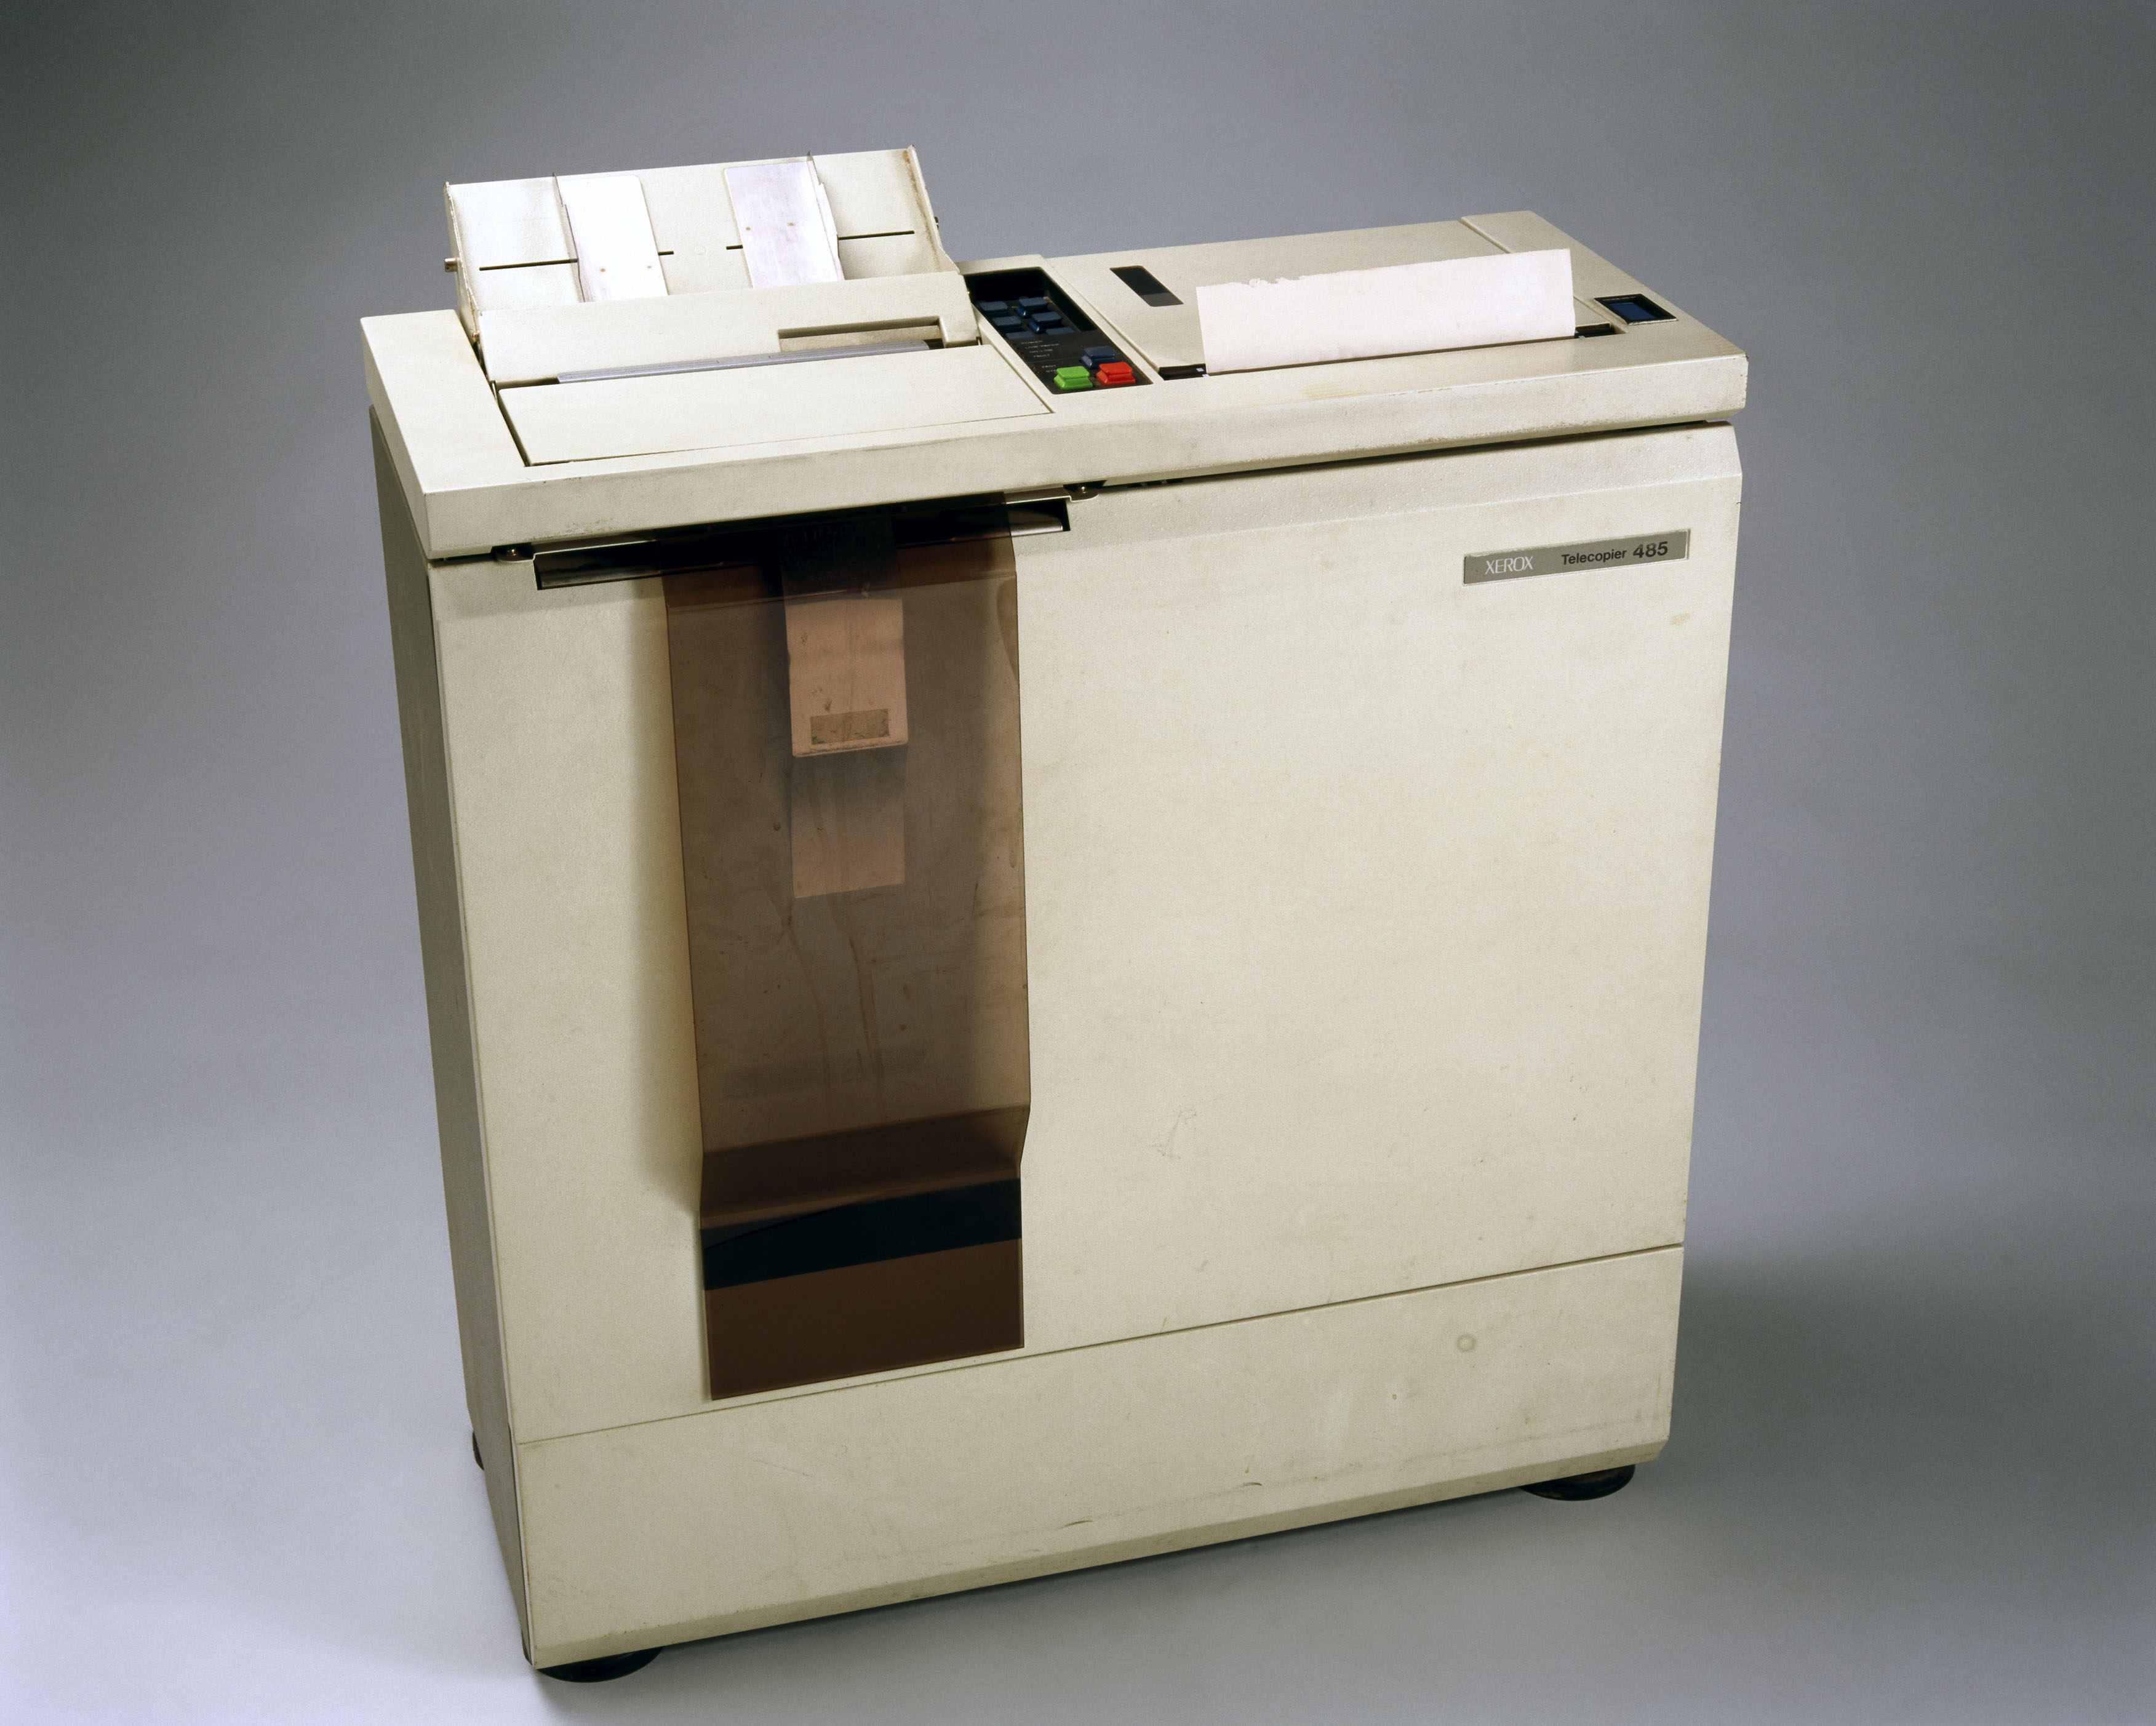 Xerox �Telecopier 485� fax machine, 1980.